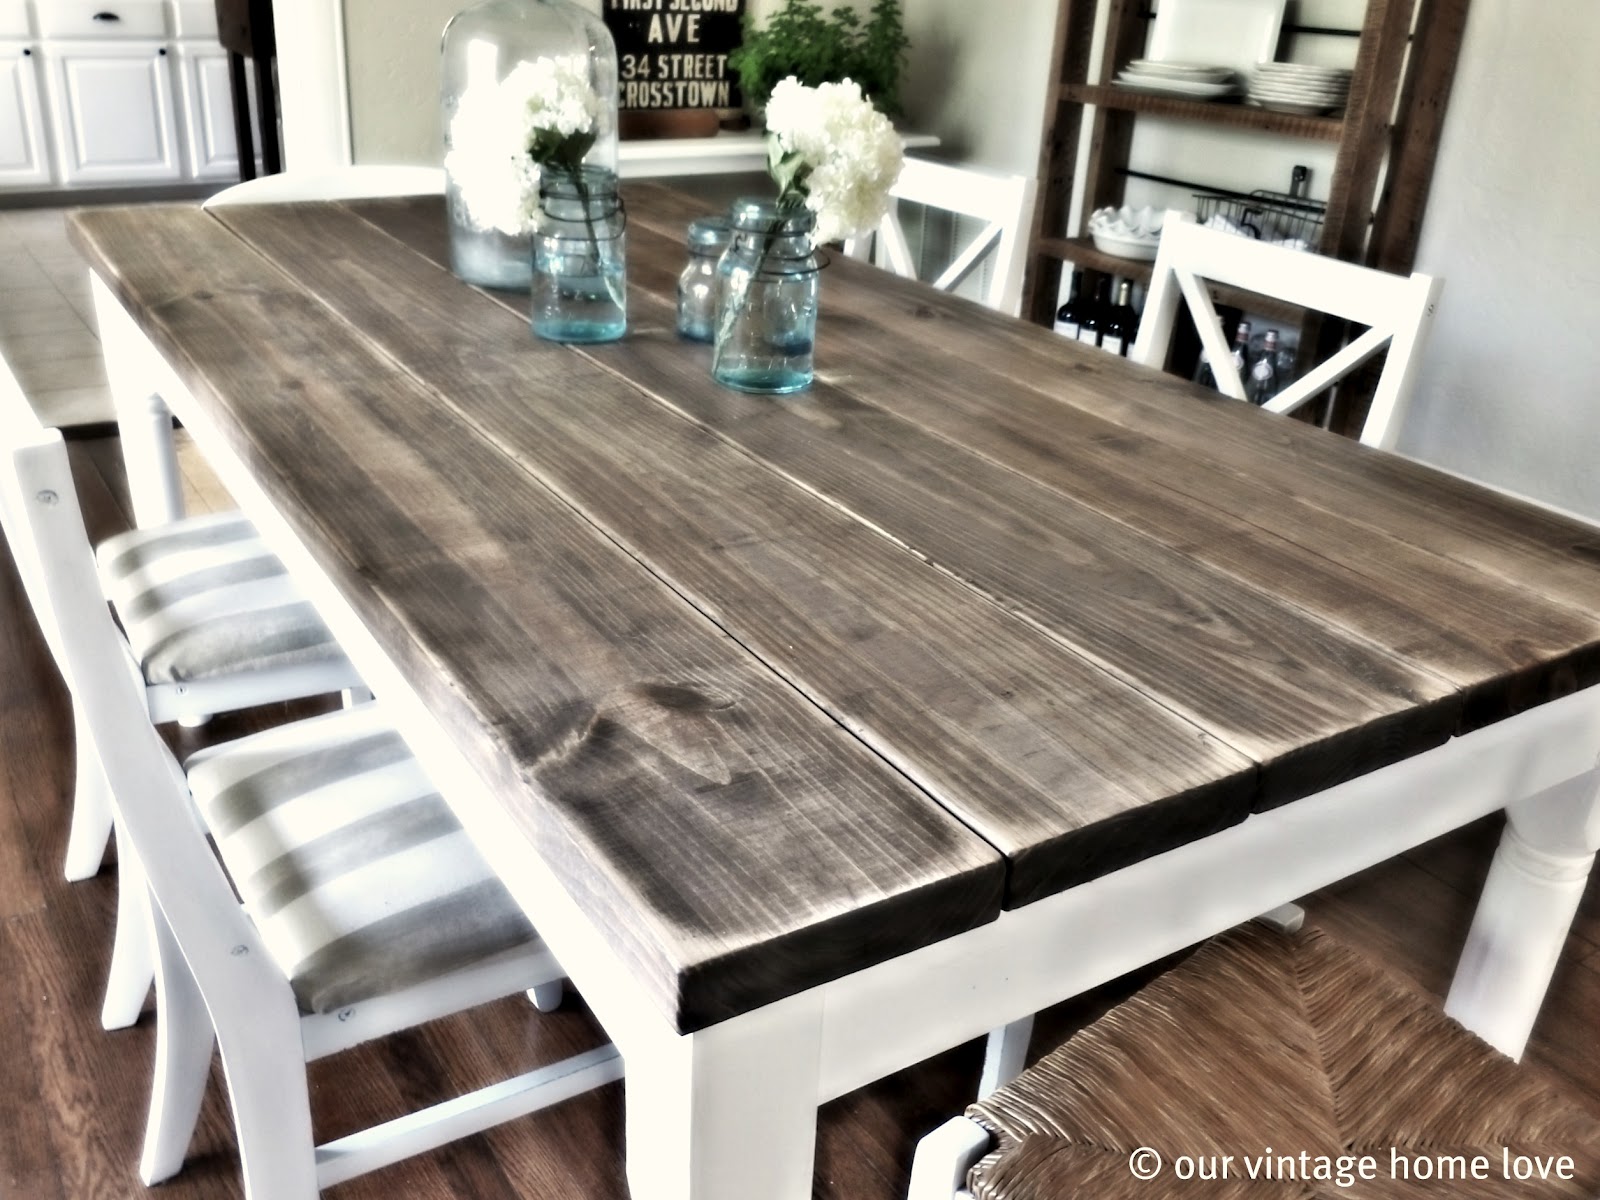 vintage home love: Dining Room Table Tutorial